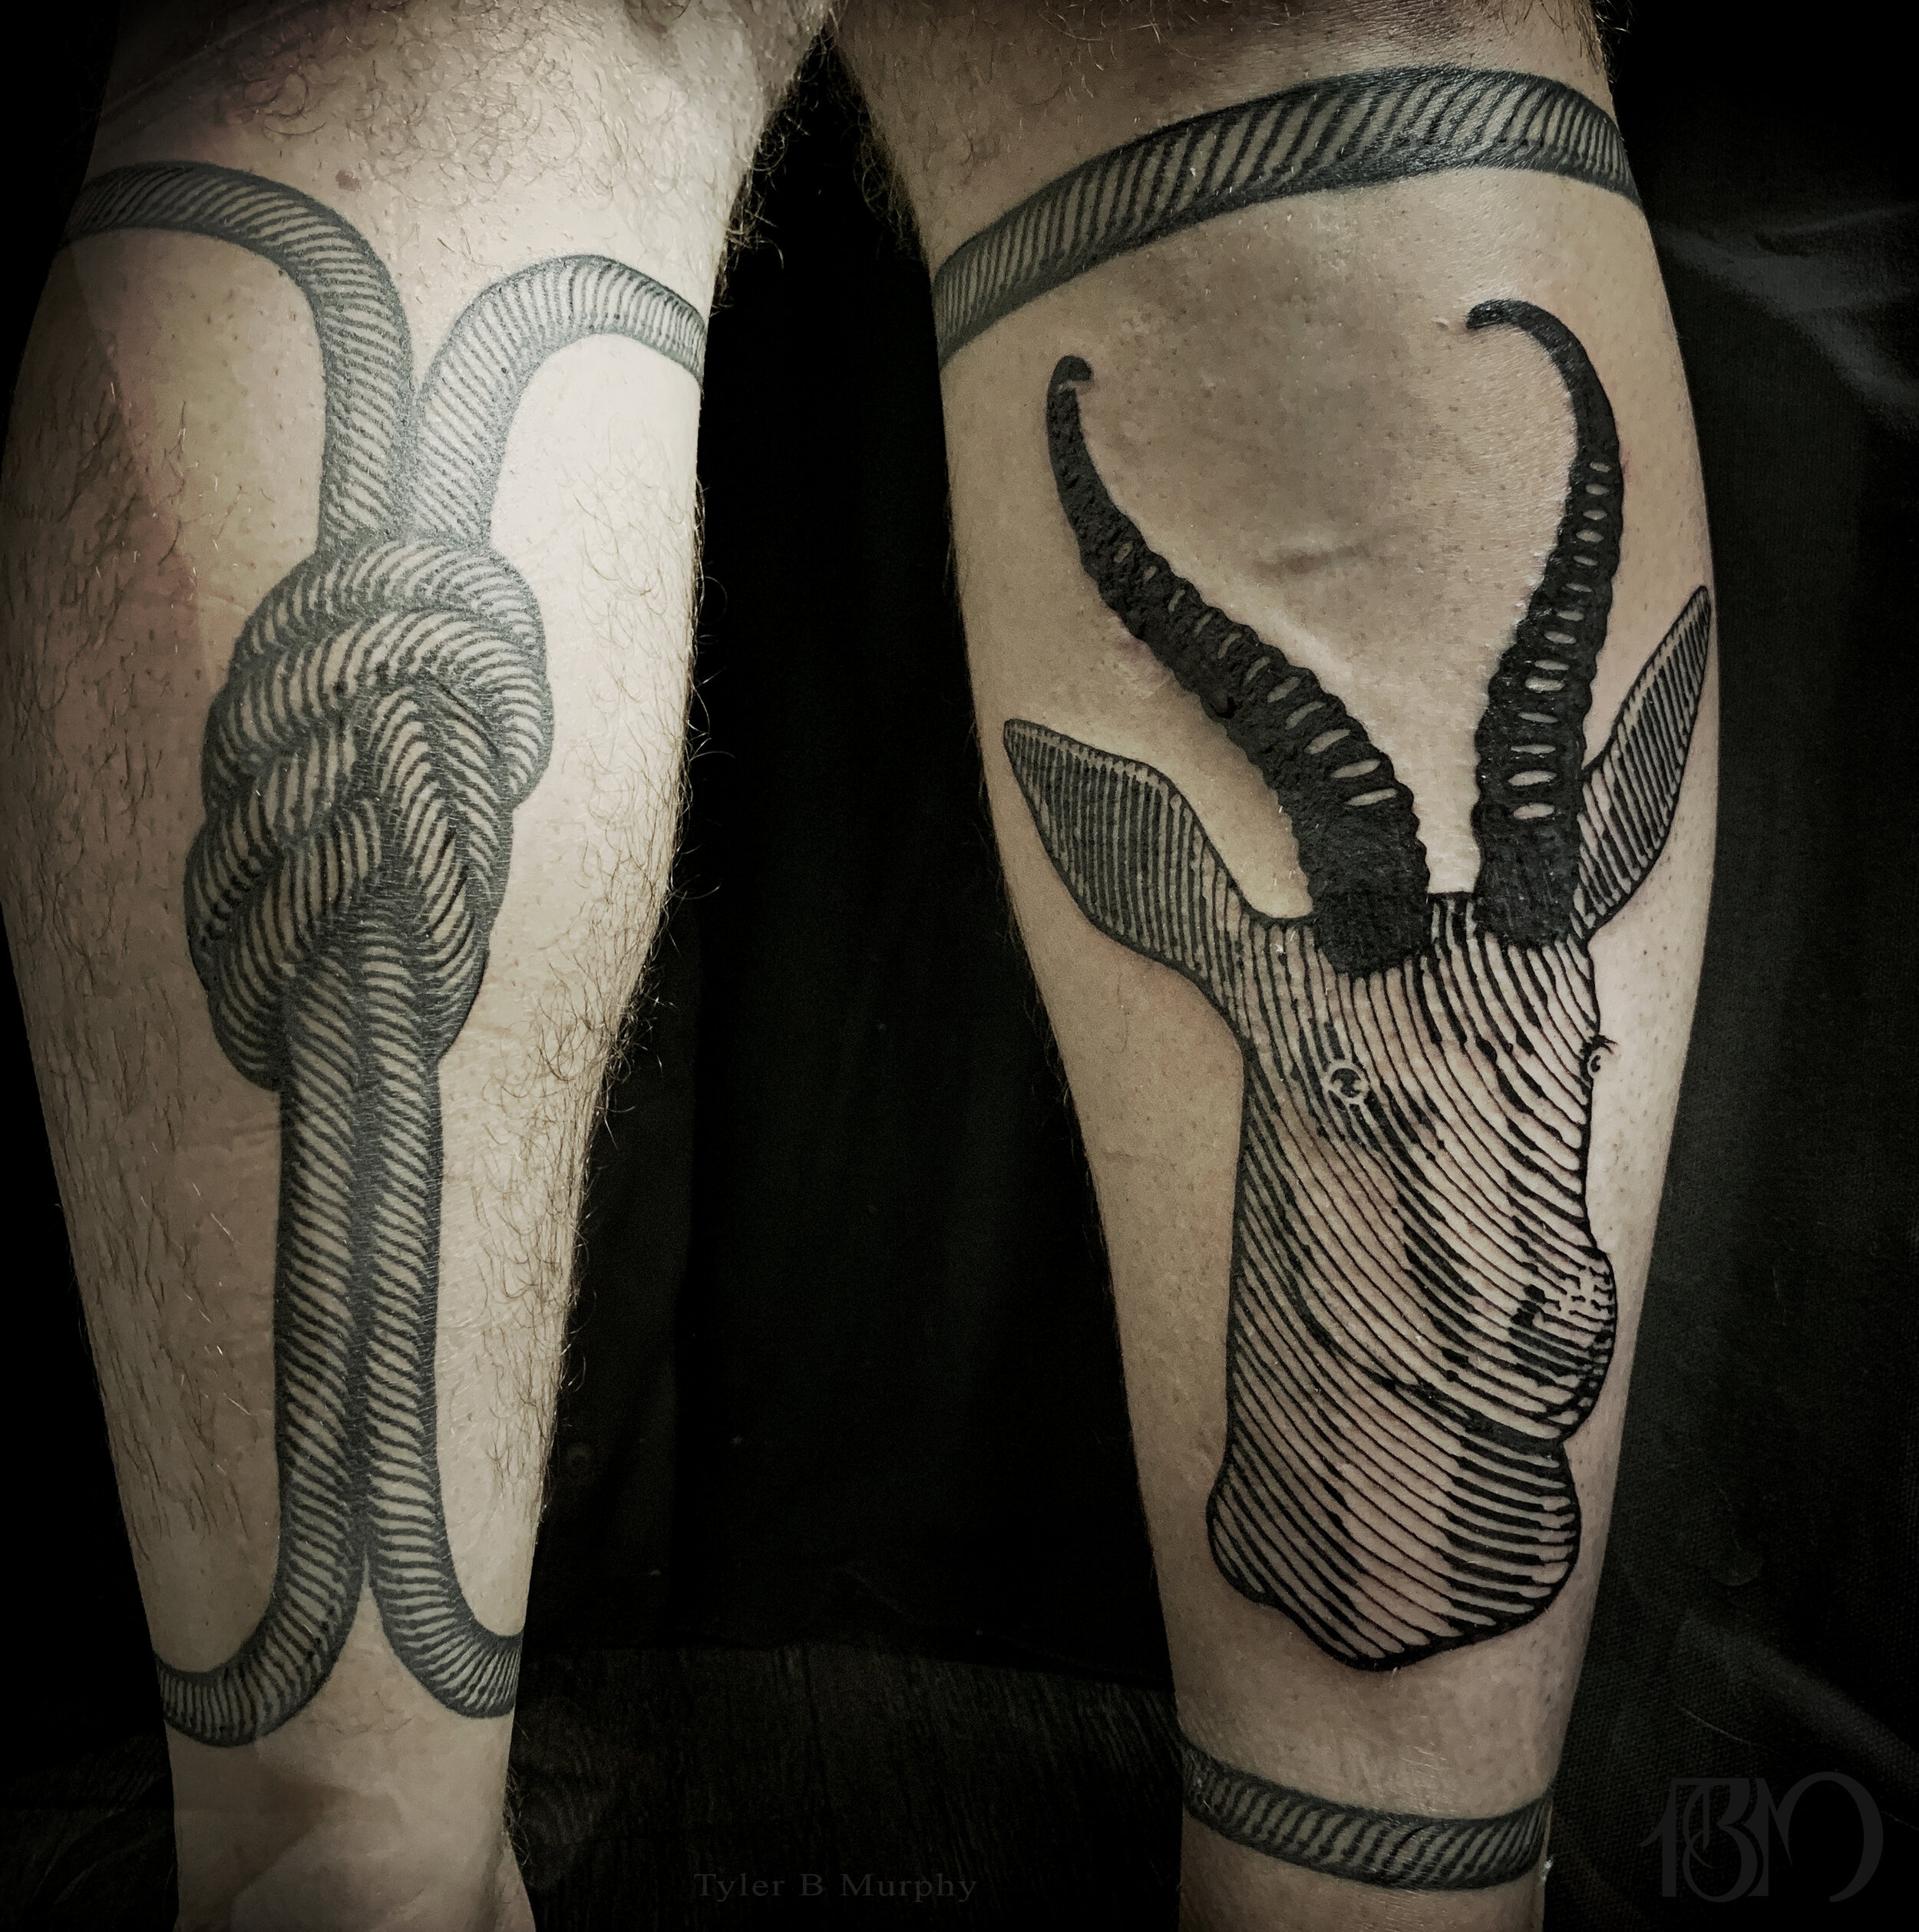 39 - Safety knot Springbok tattoo Tyler B Murphy copy.jpg